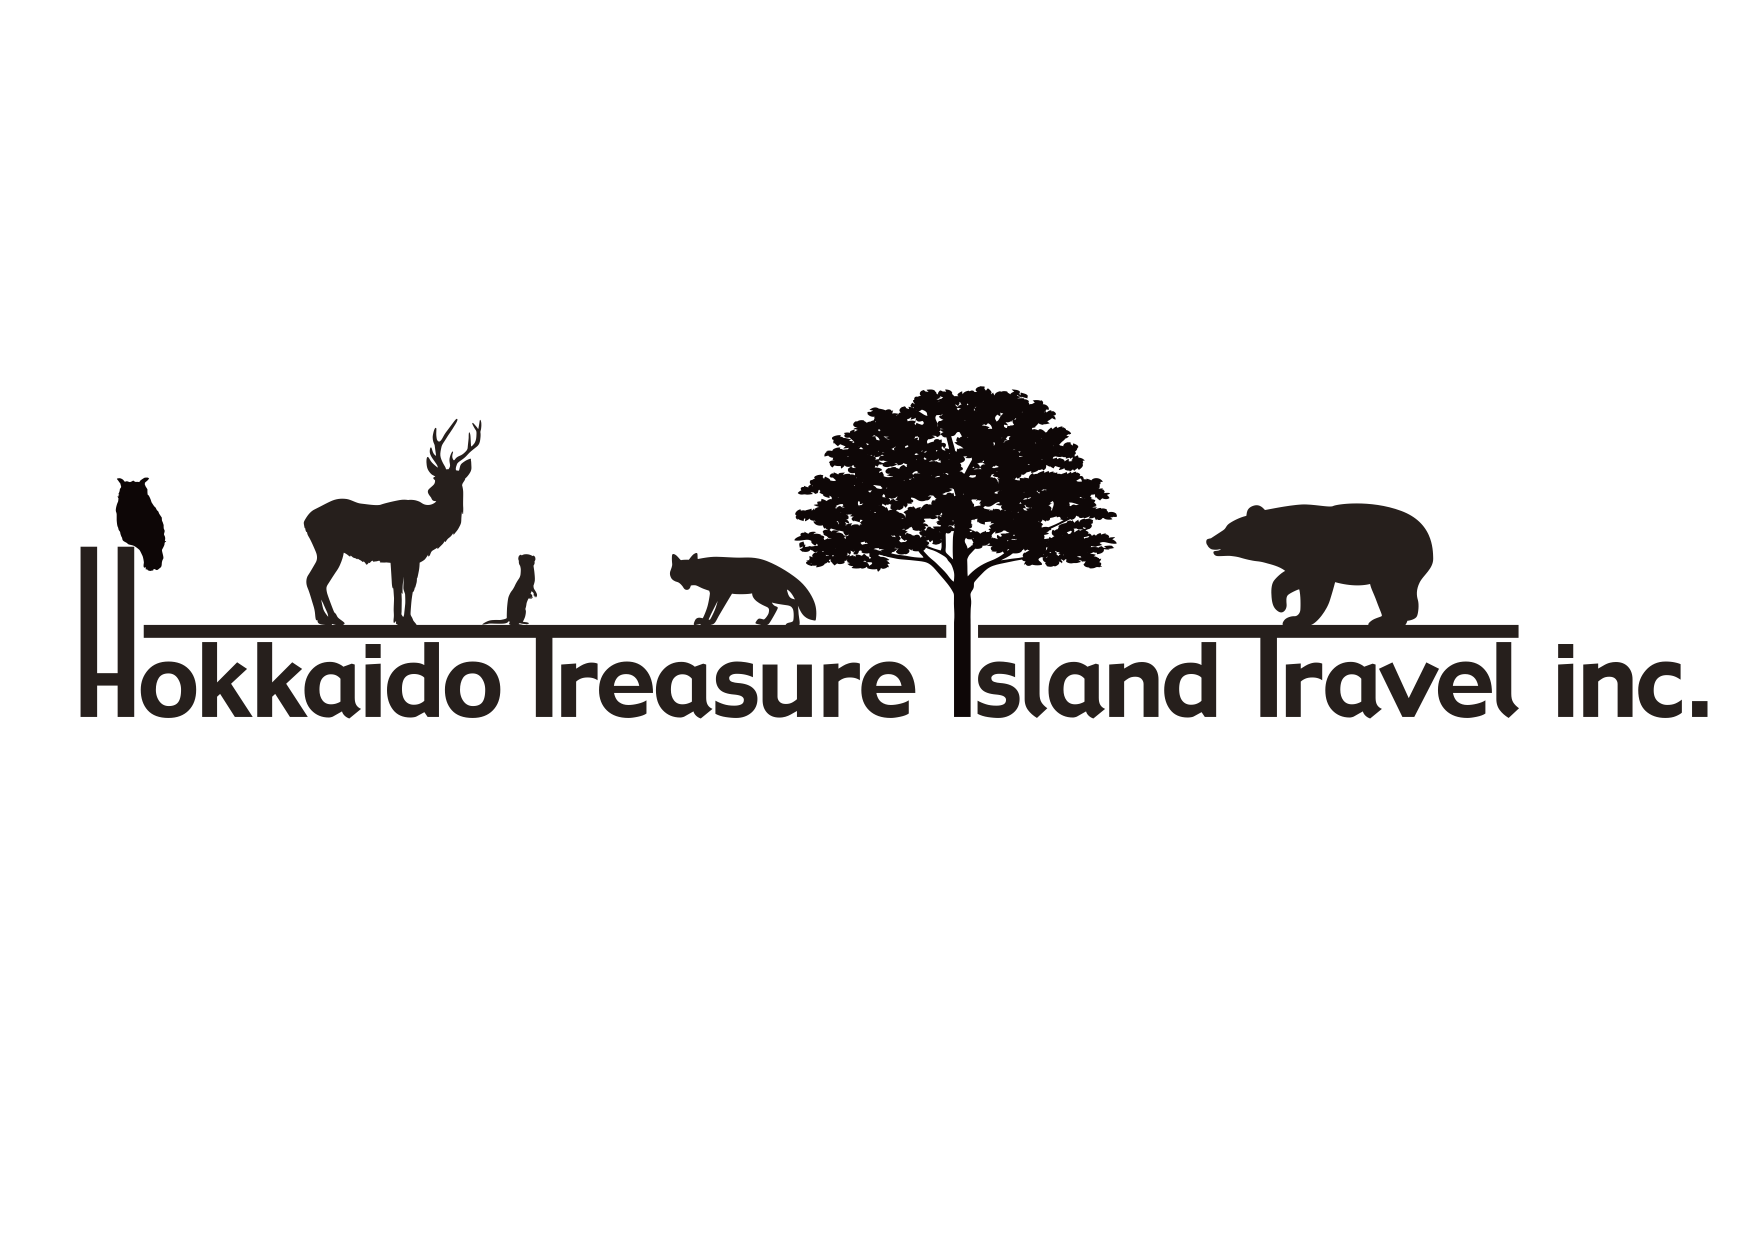 Hokkaido Treasure Island Travel